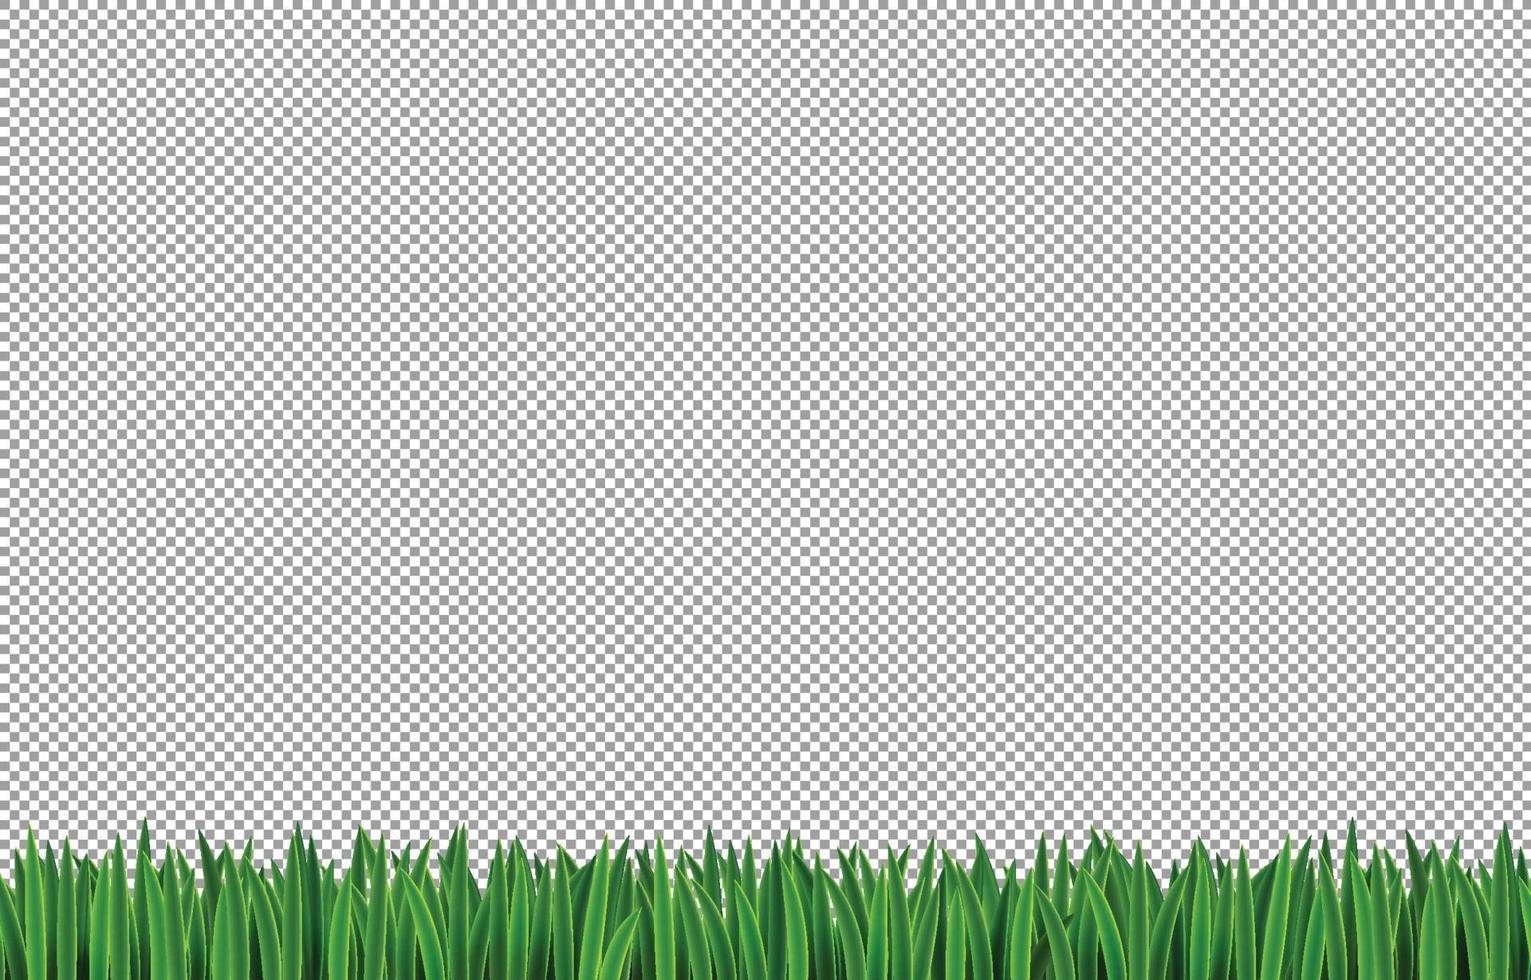 Realistic Grass Element vector